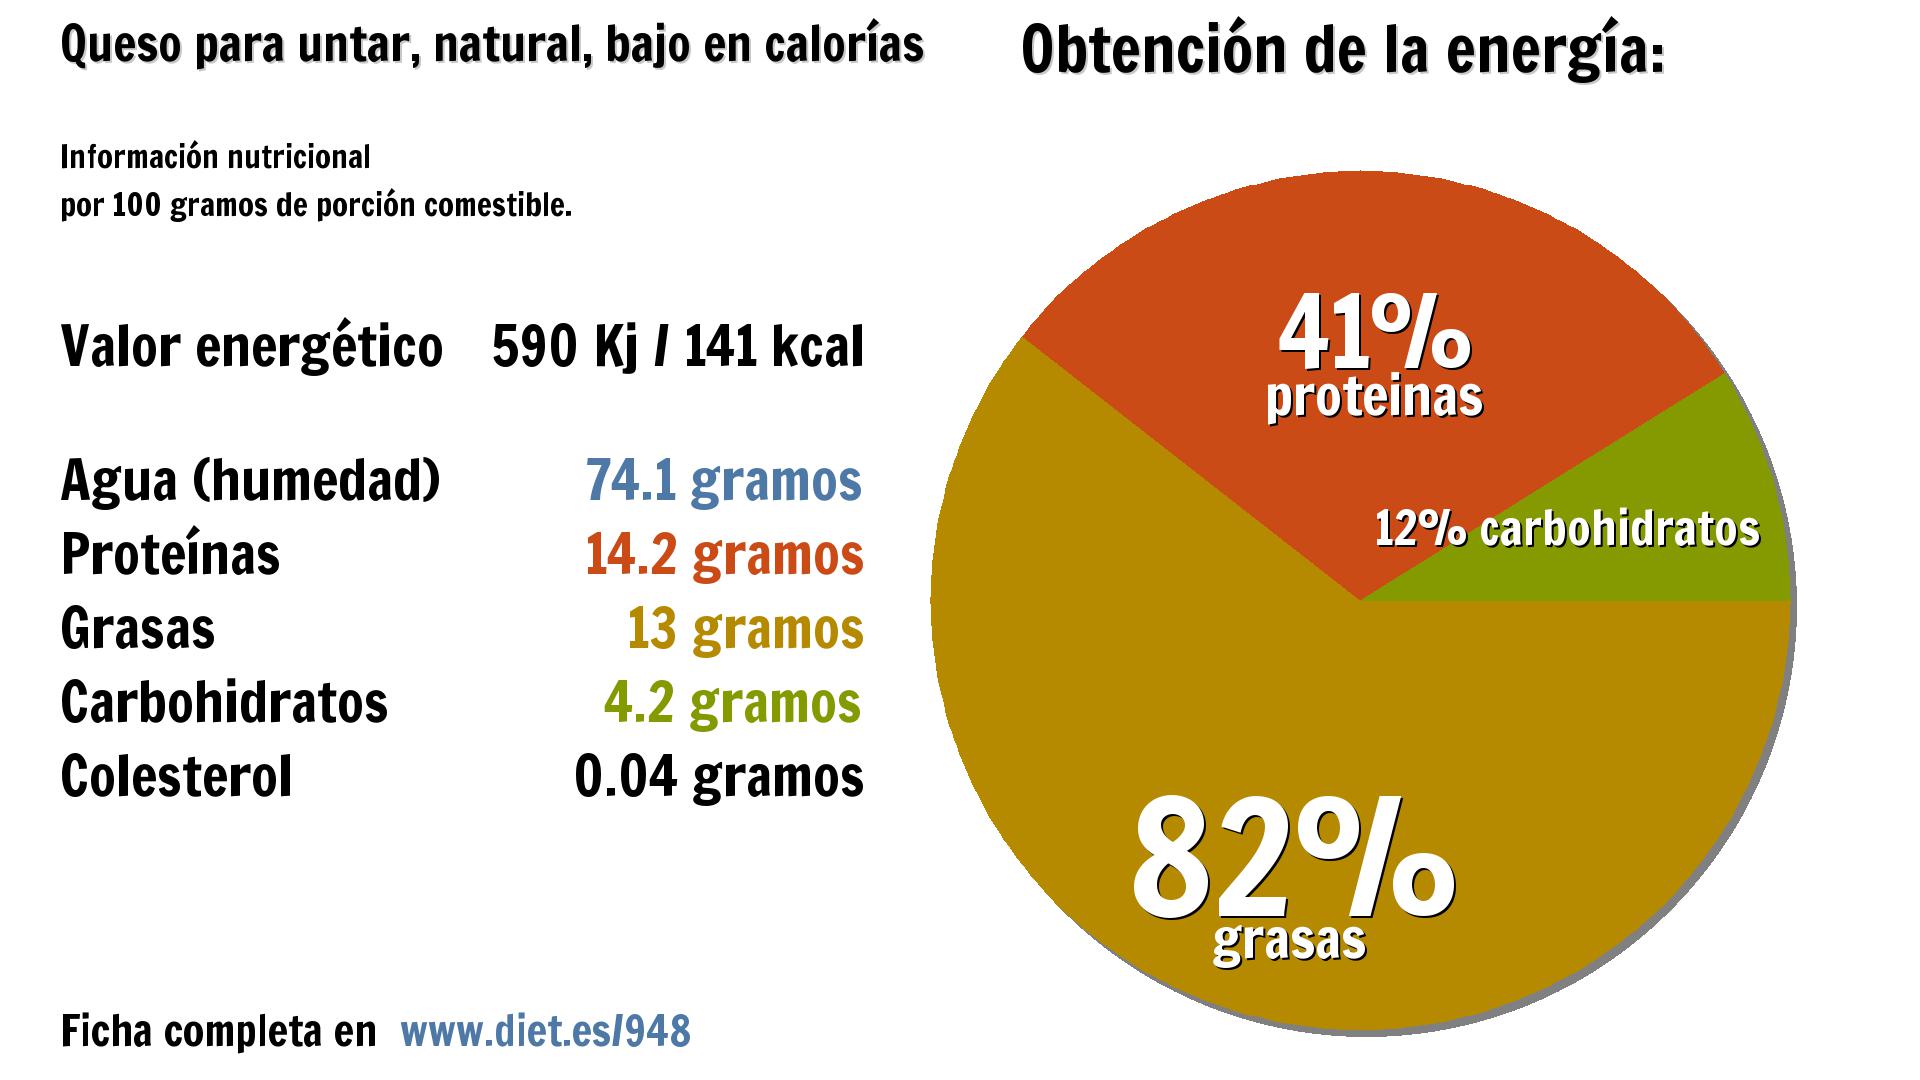 Queso para untar, natural, bajo en calorías: energía 590 Kj, agua 74 g., proteínas 14 g., grasas 13 g. y carbohidratos 4 g.